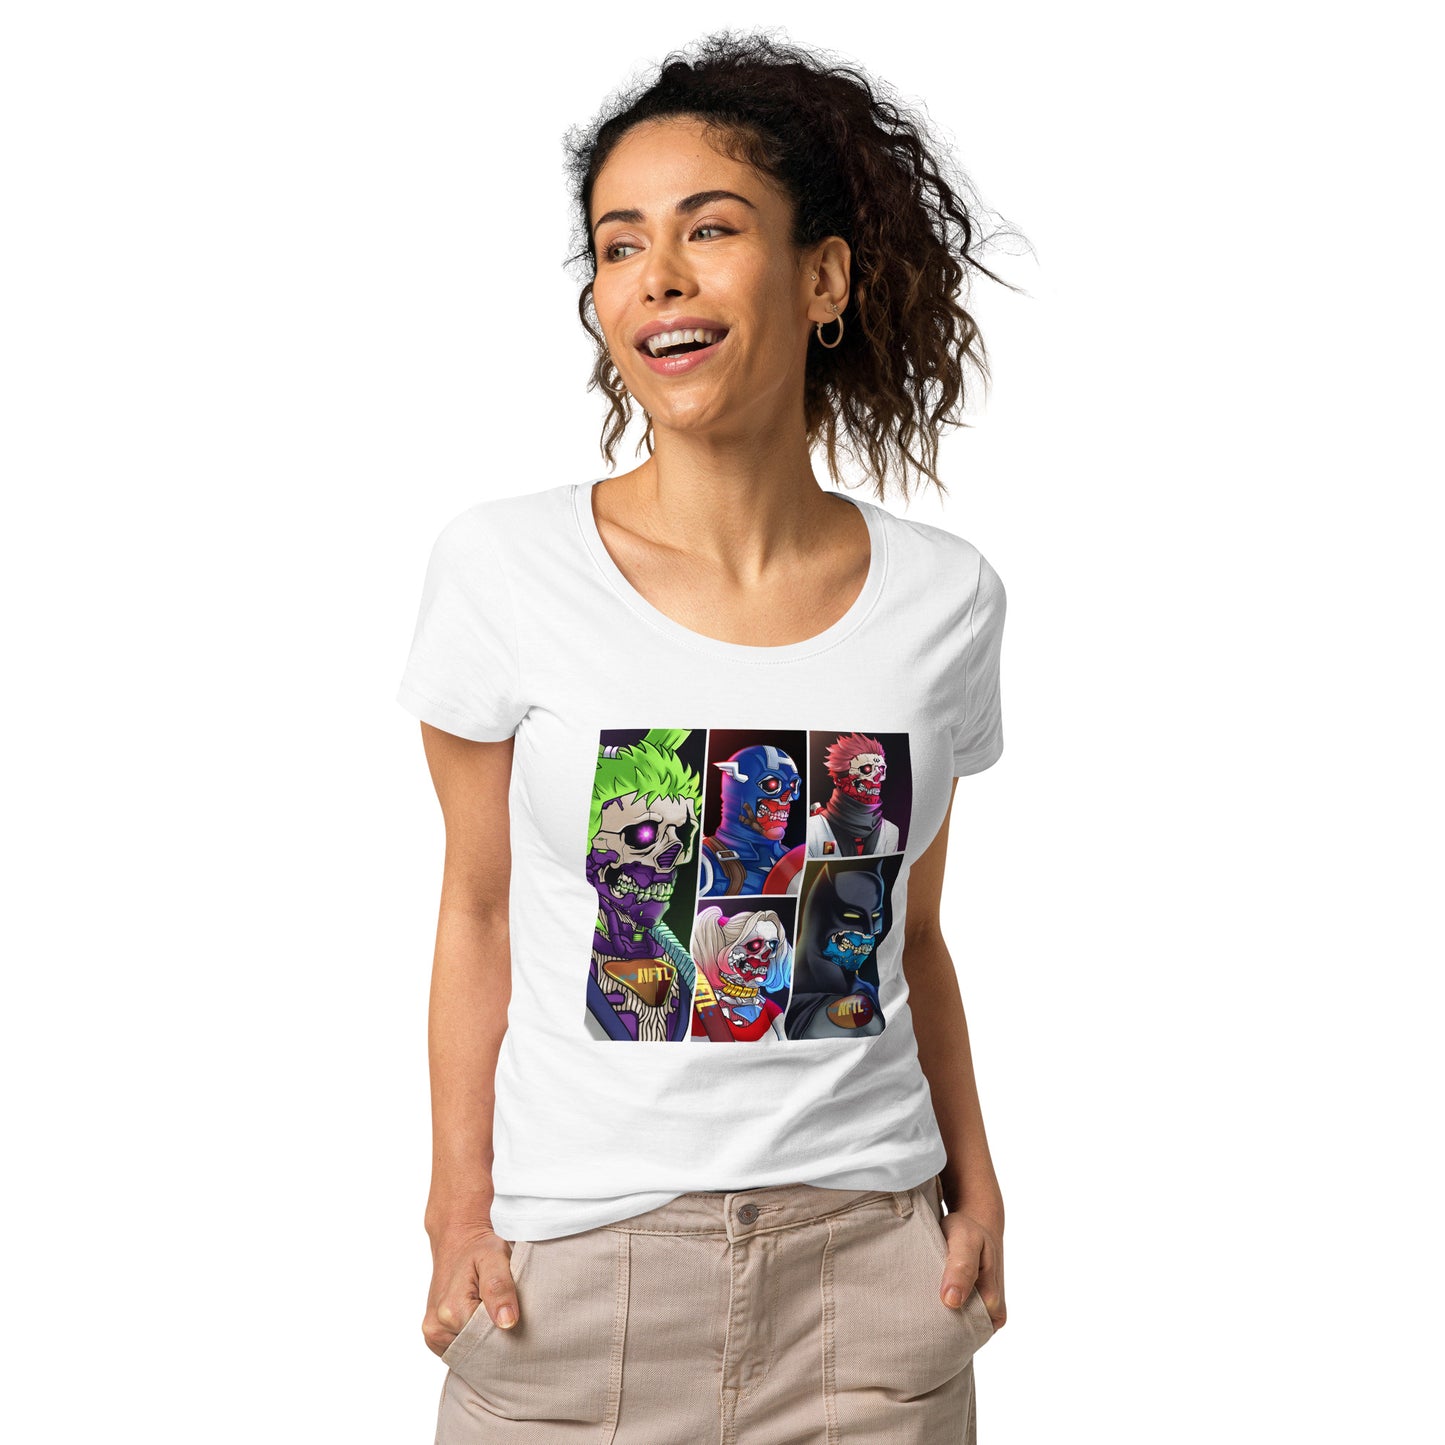 Women’s organic t-shirt $NFTL Limited Edition #1